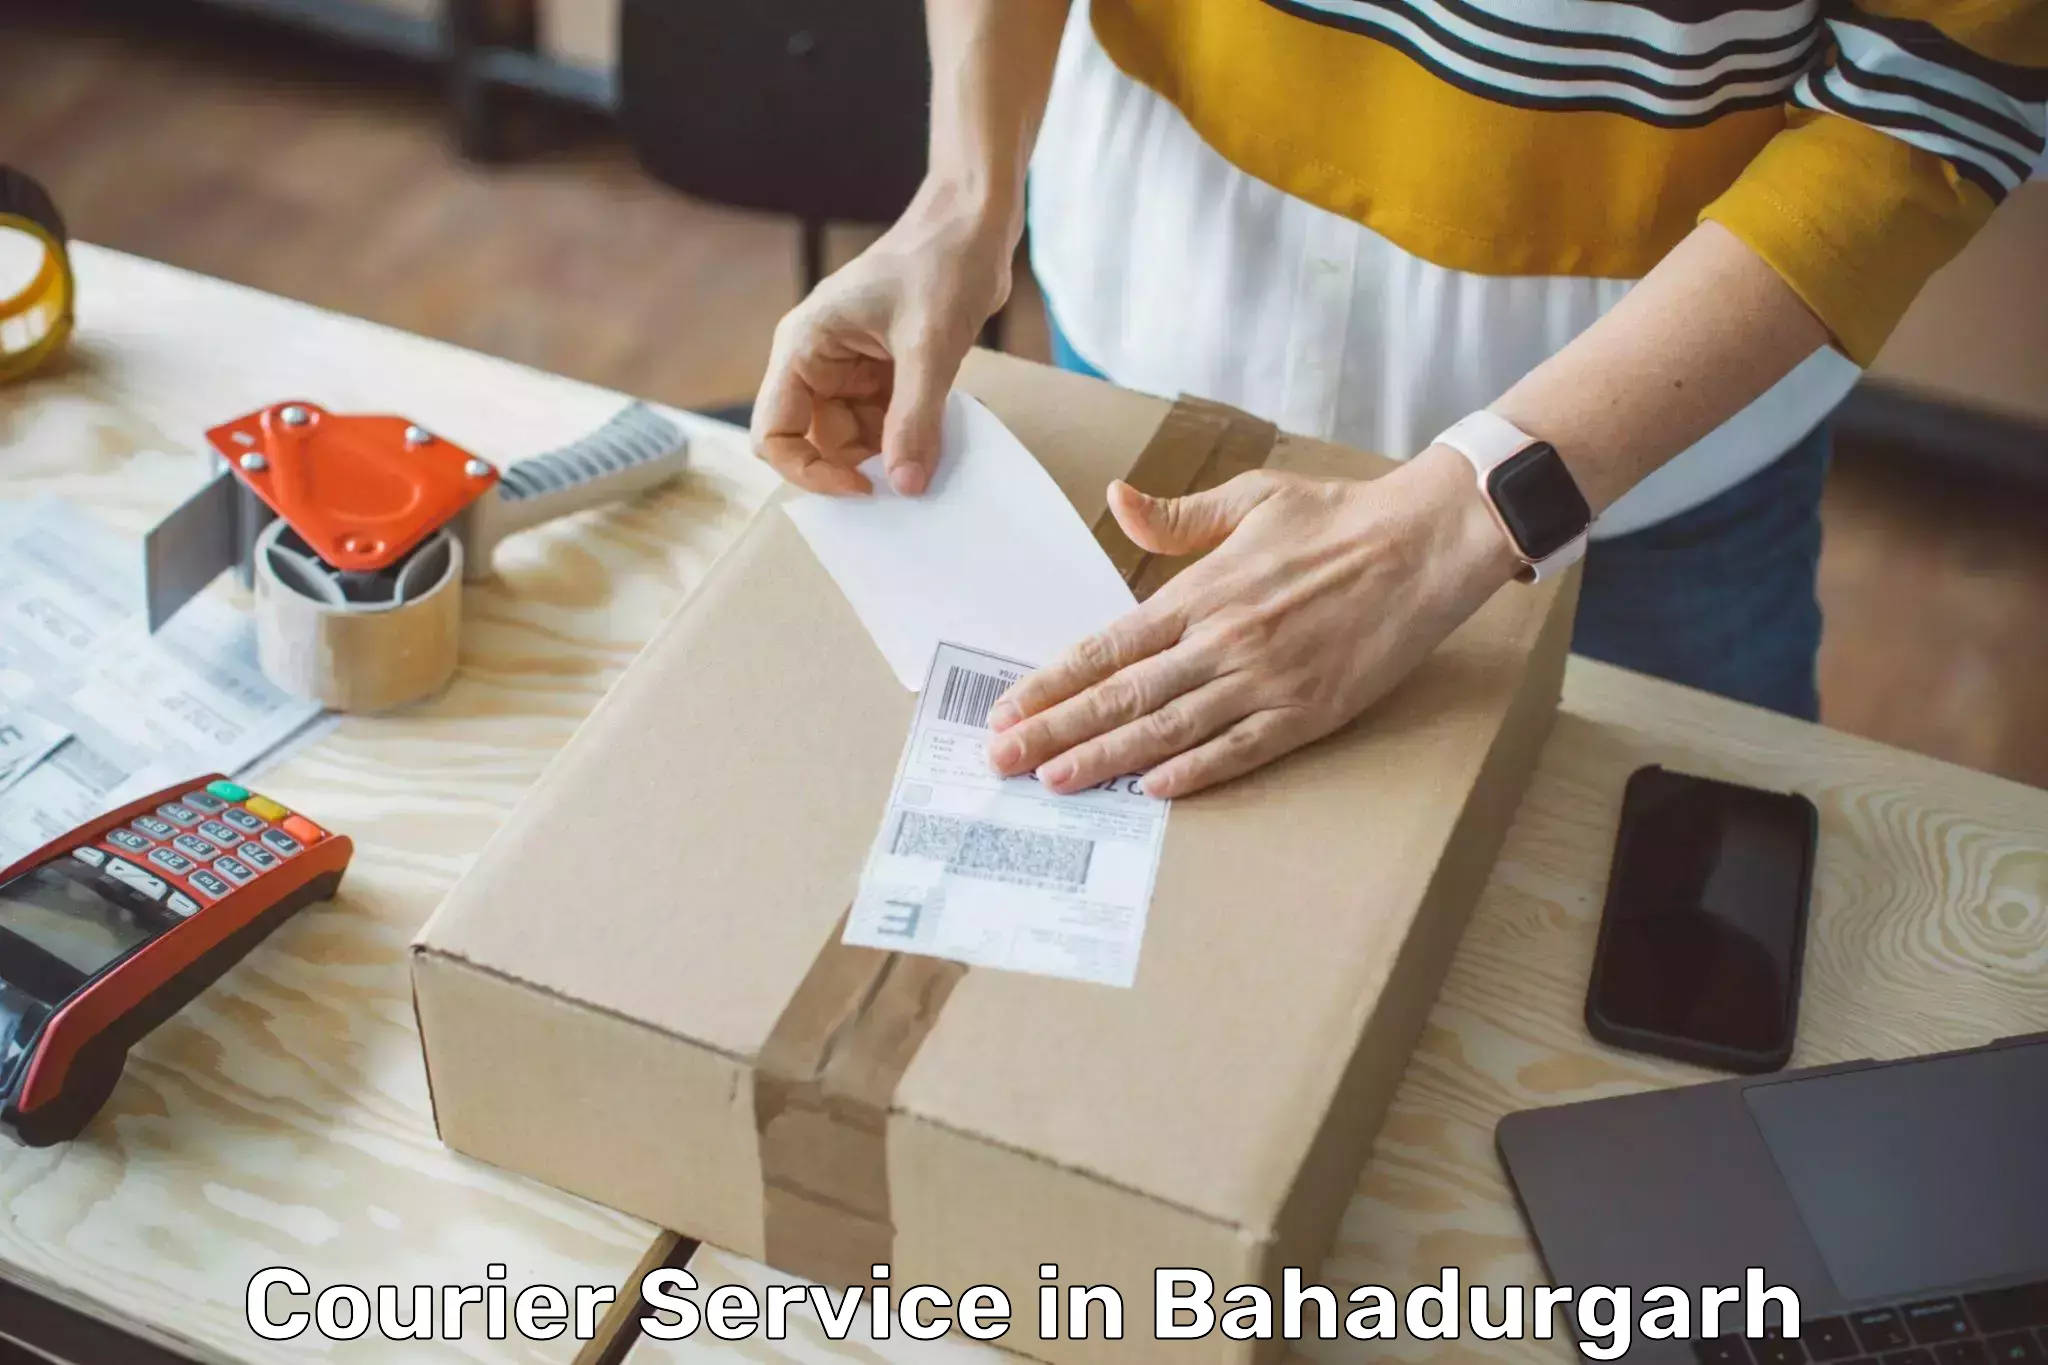 Seamless shipping experience in Bahadurgarh